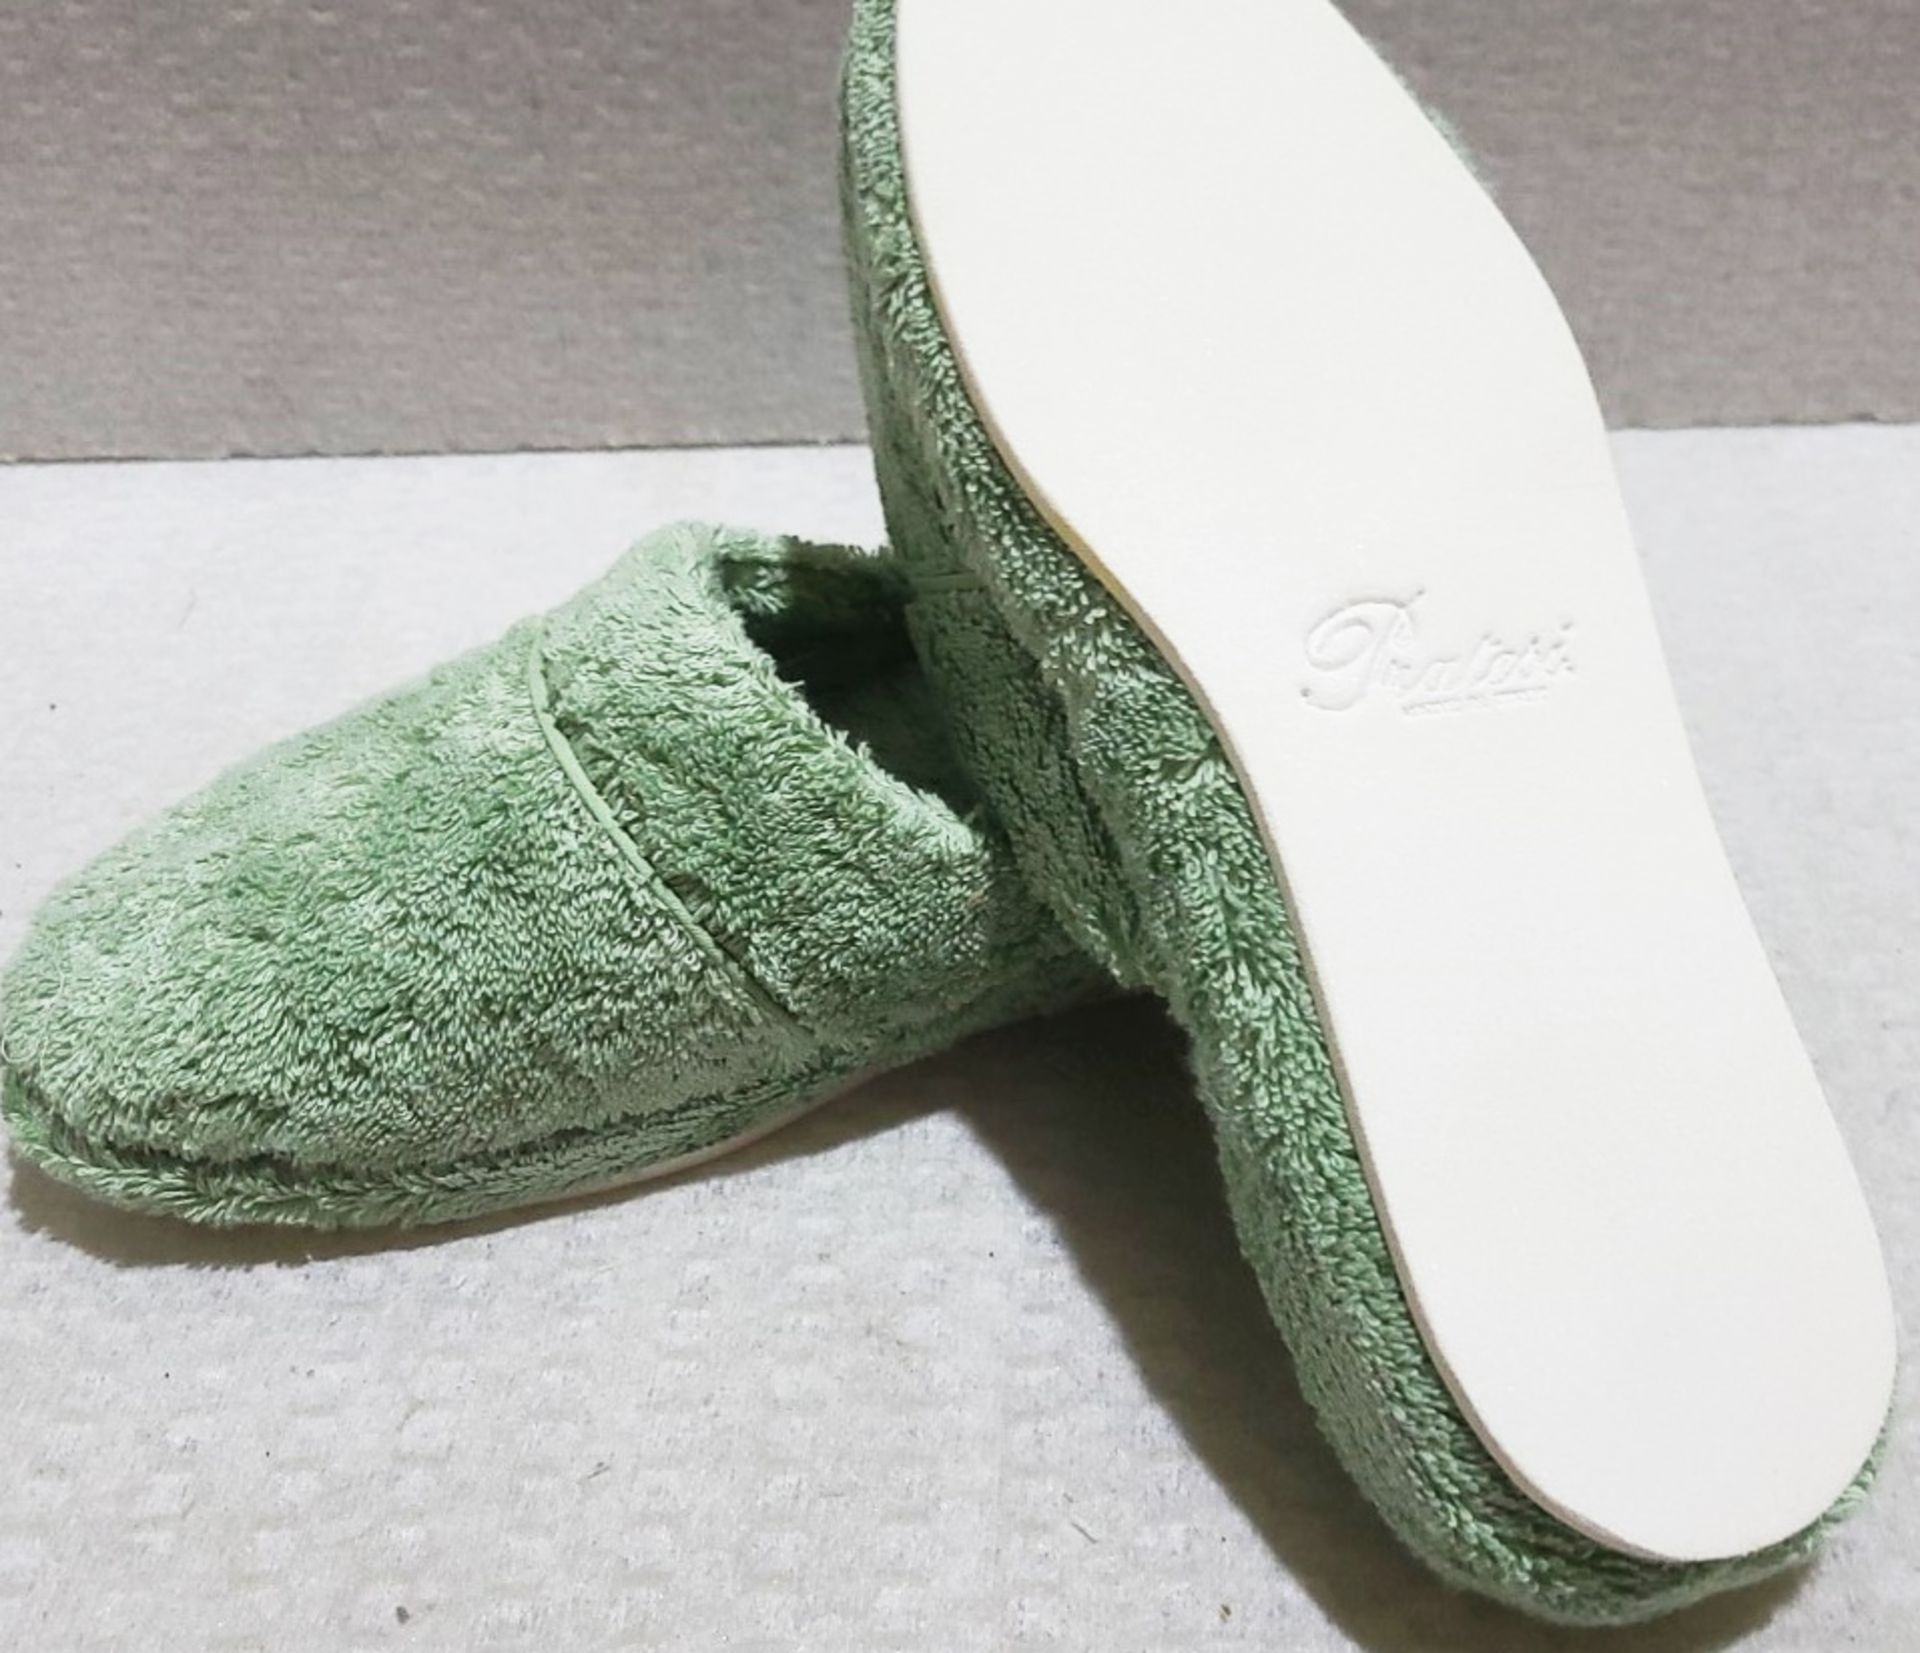 1 x PRATESI Panofole Sage Terry Cotton Slippers Size 38/39 - Original Price £200.00 - Image 4 of 4